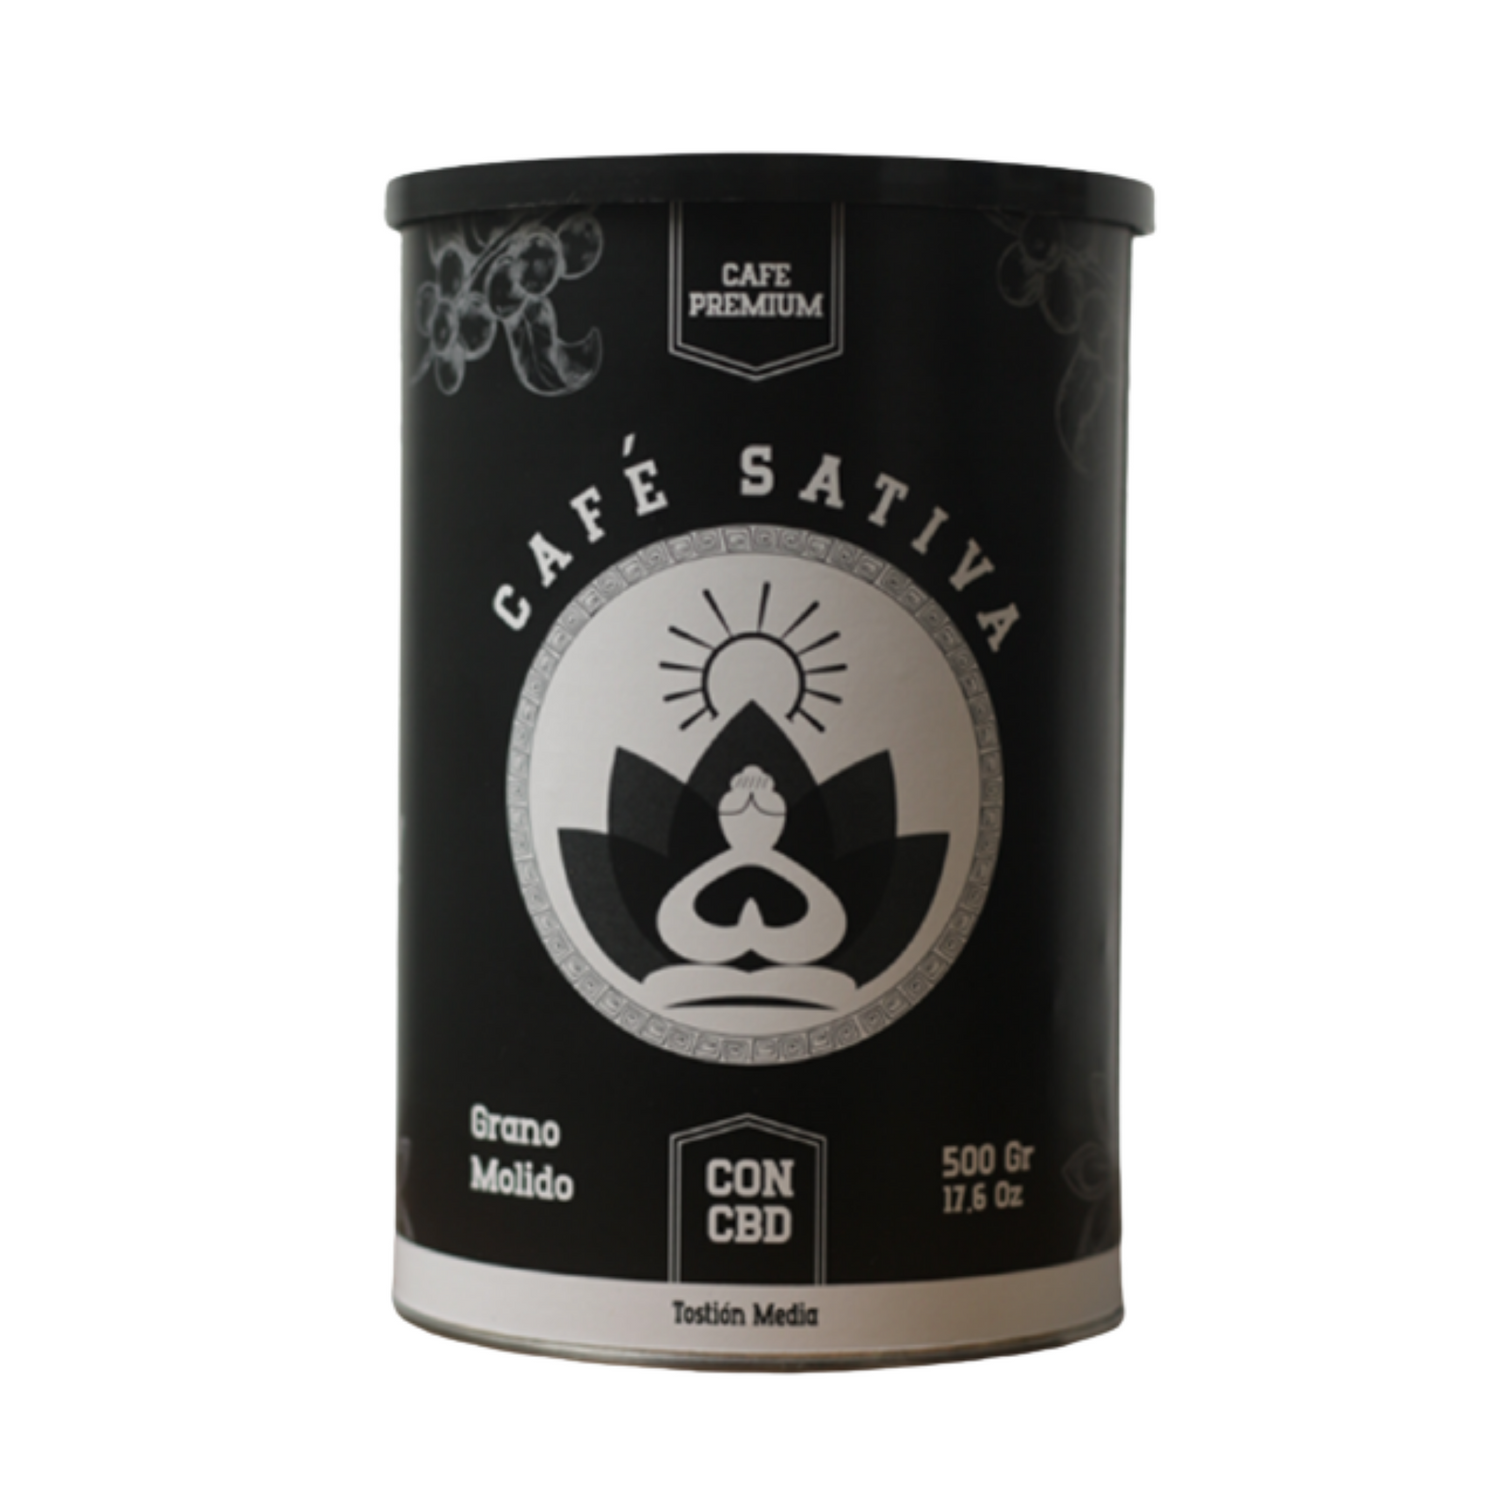 Sativa Single-origin Organic coffee with CBD 500g